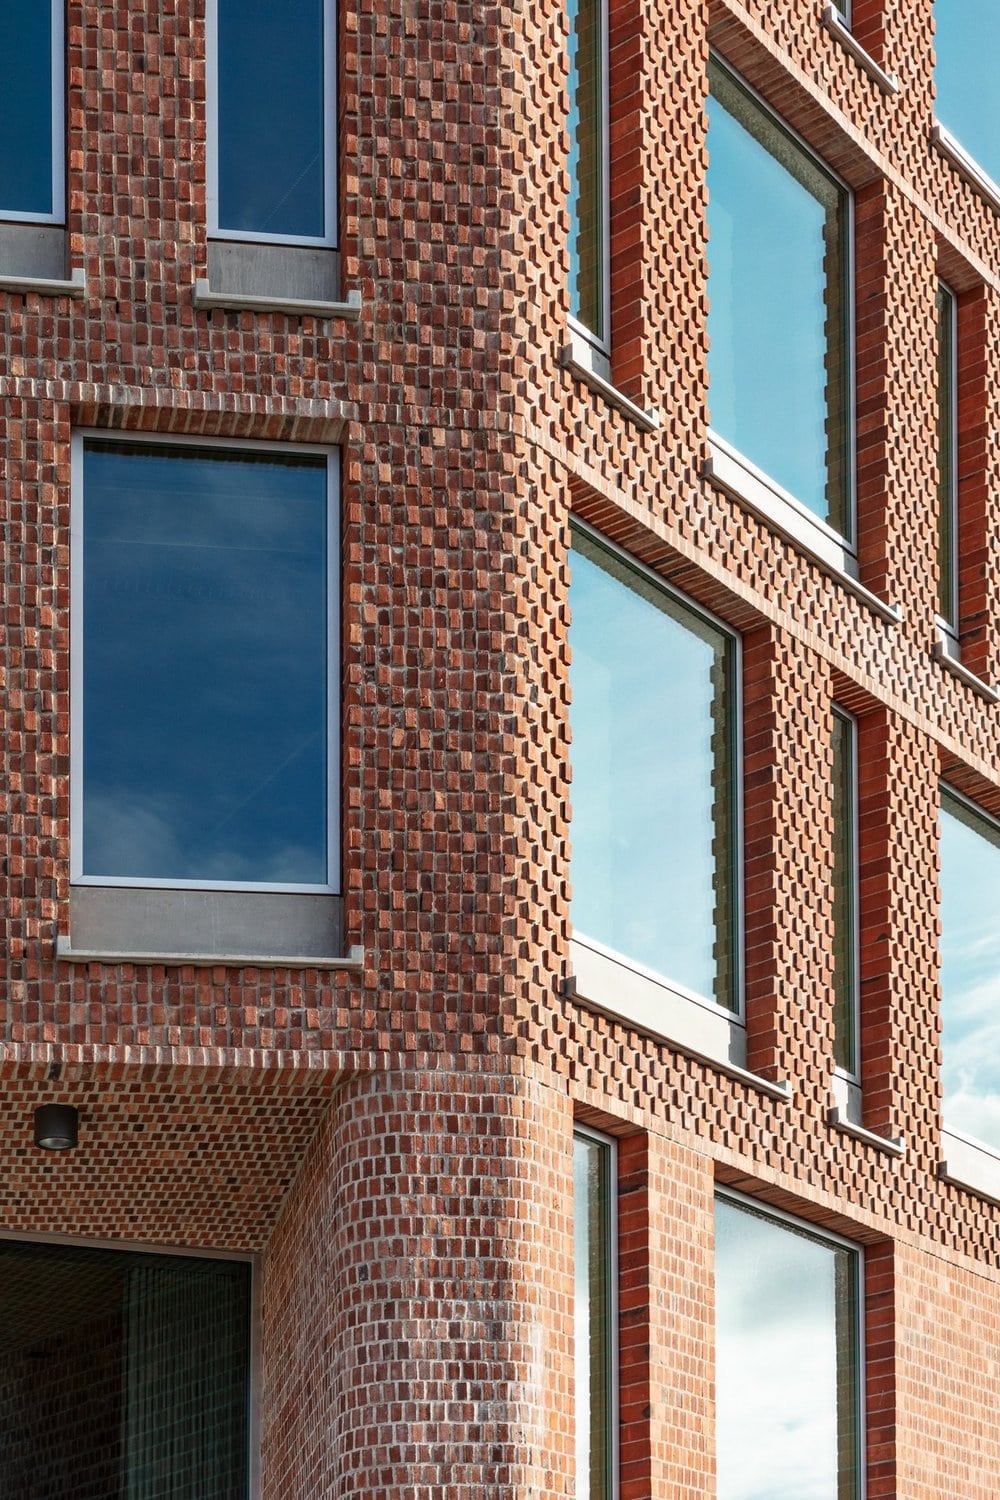 KAB House by Henning Larsen Architects